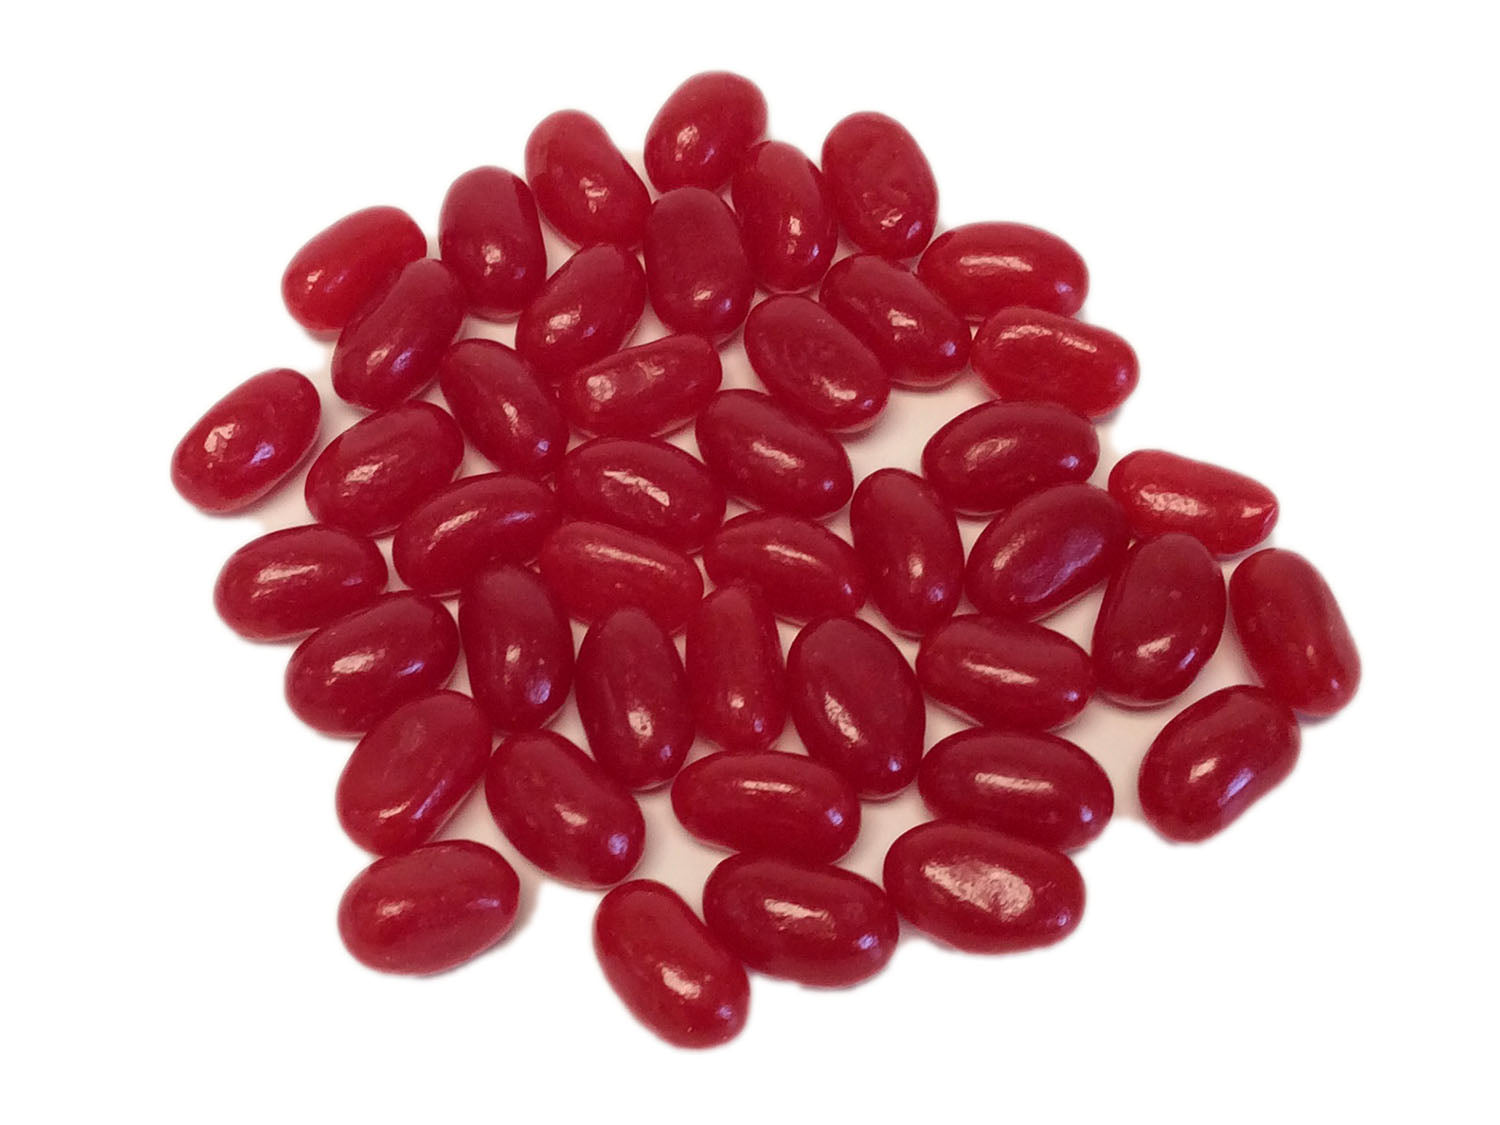 Jumbo Jelly Beans - Cinnamon - bulk 3 lb bag